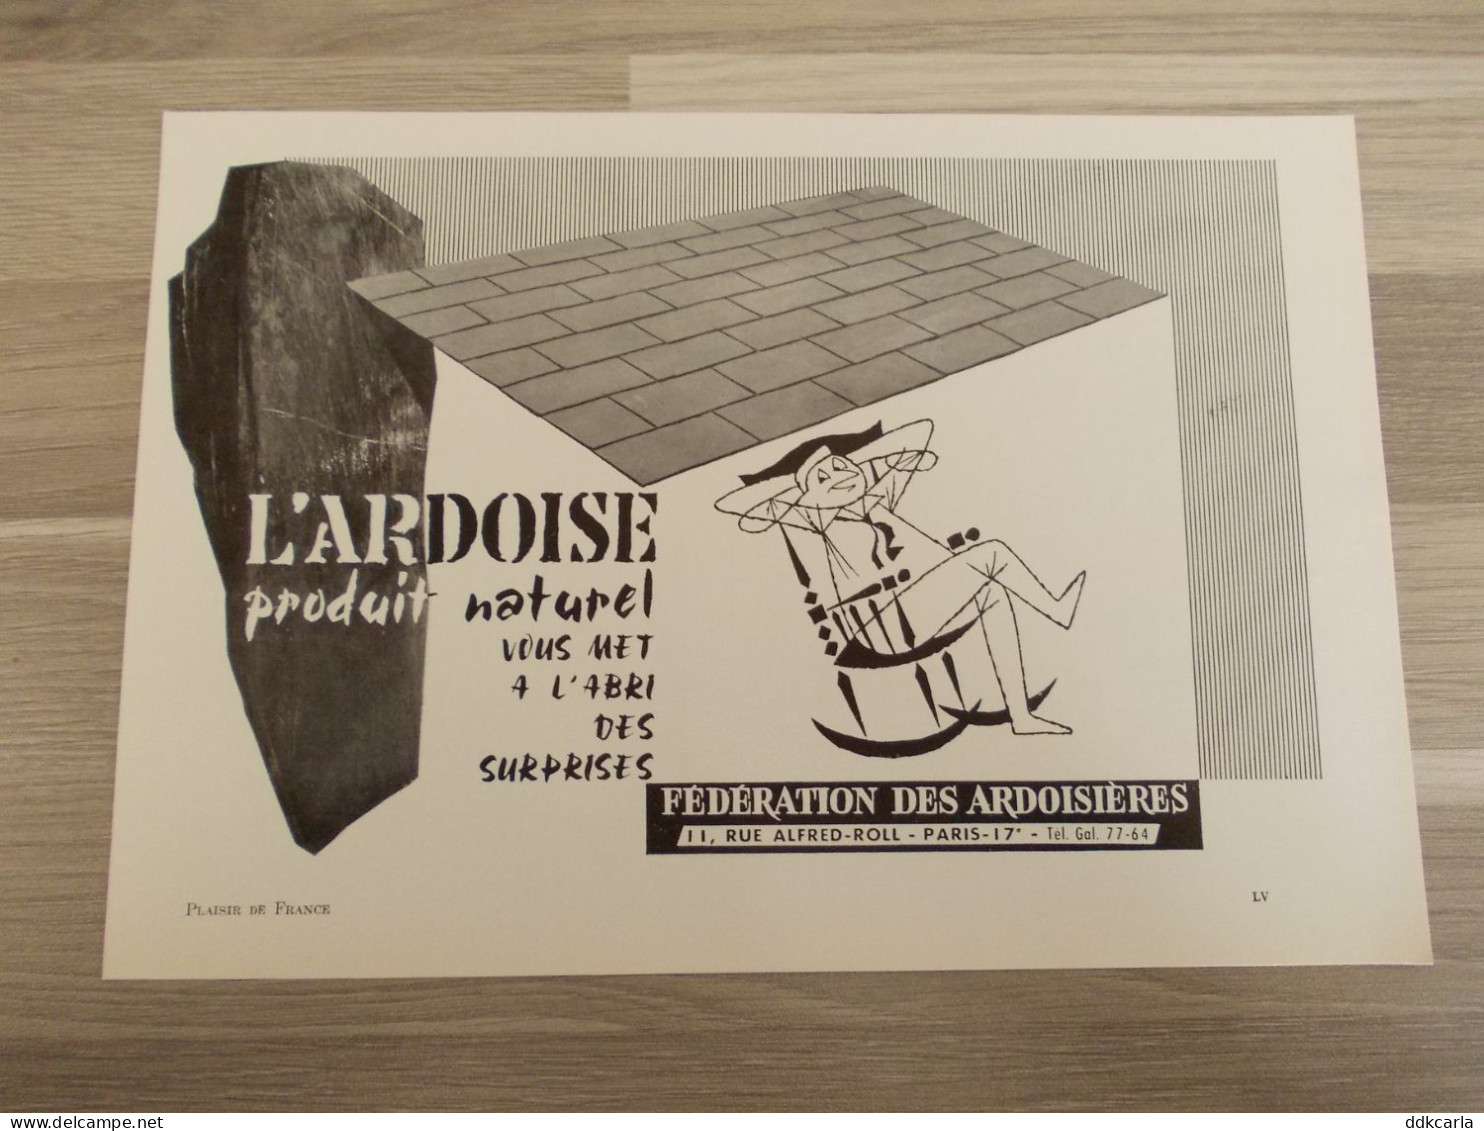 Reclame Advertentie Uit Oud Tijdschrift 1957 - L'Ardoise Produit Naturel - Publicidad